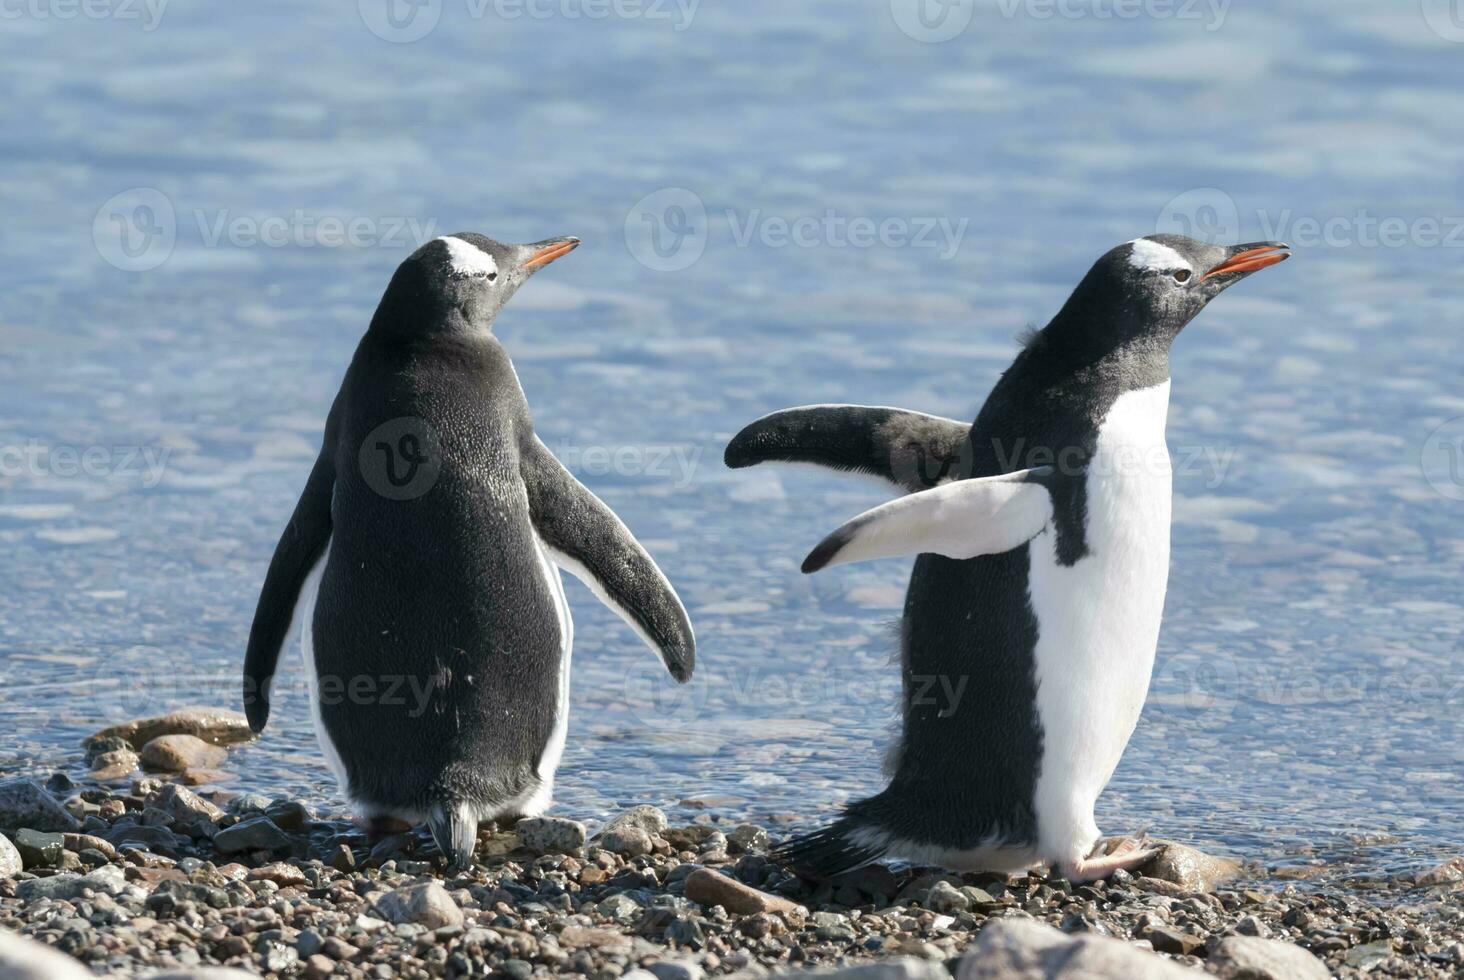 gentoo pingvin, neko hamn, Antarktis foto